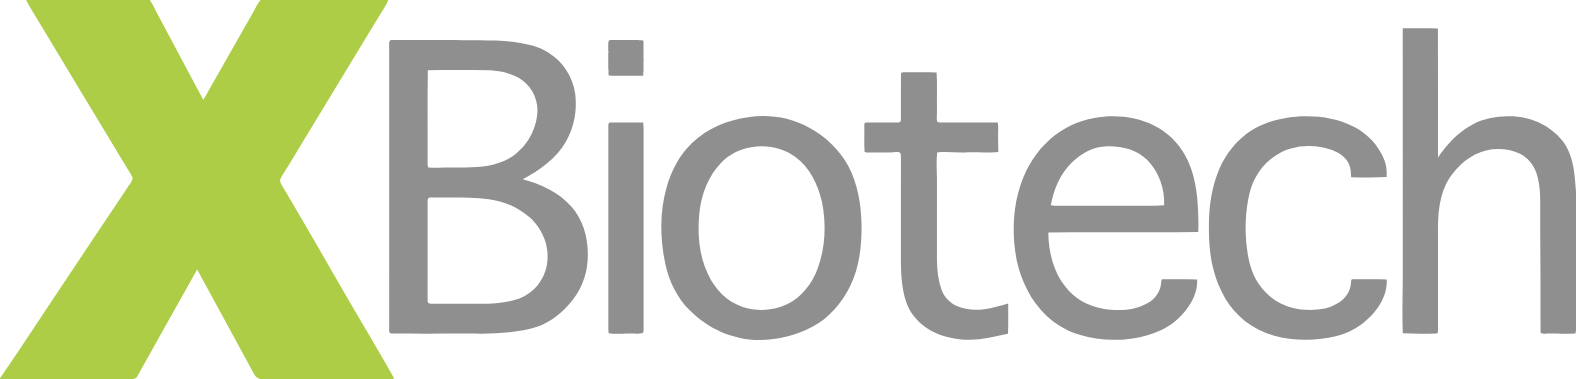 XBiotech logo large (transparent PNG)